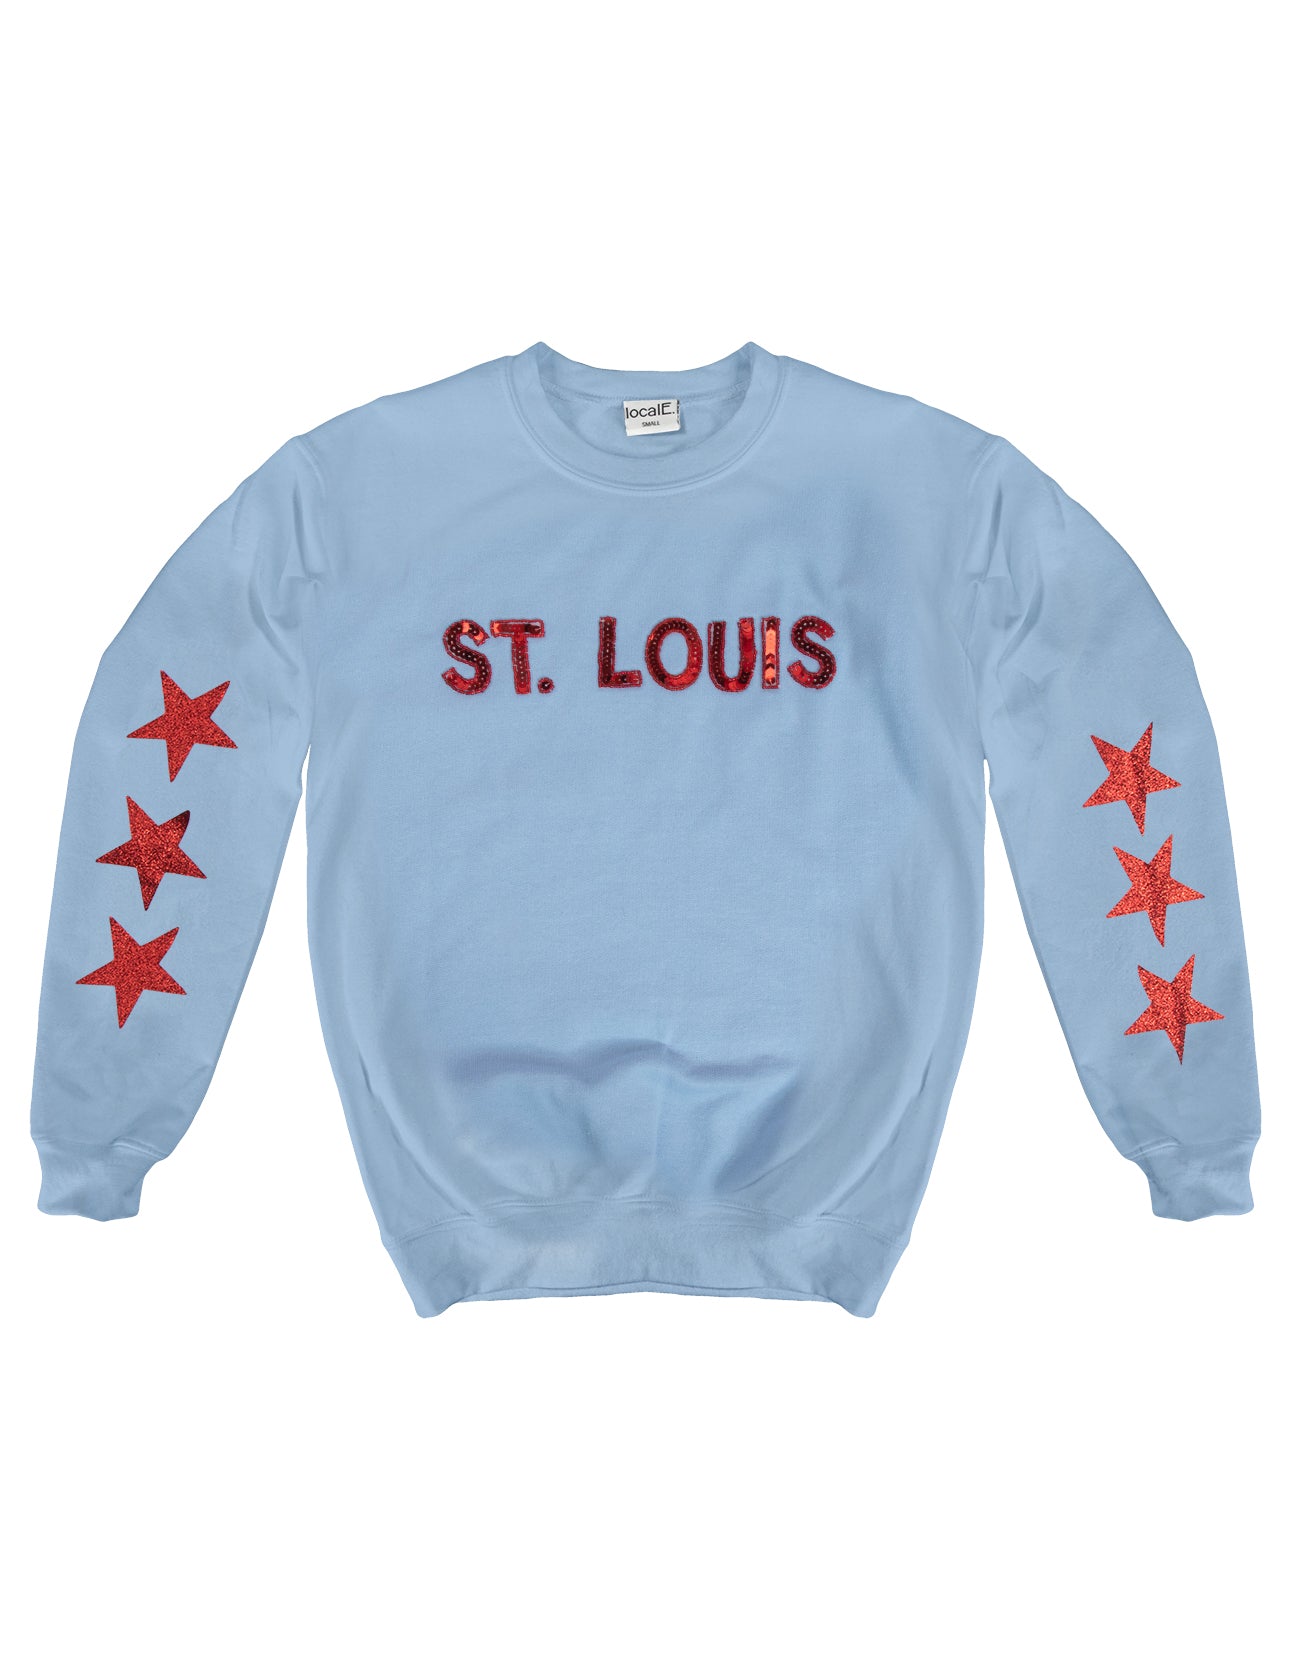 St. Louis Sequin Star Sweatshirt - Blue - localE.